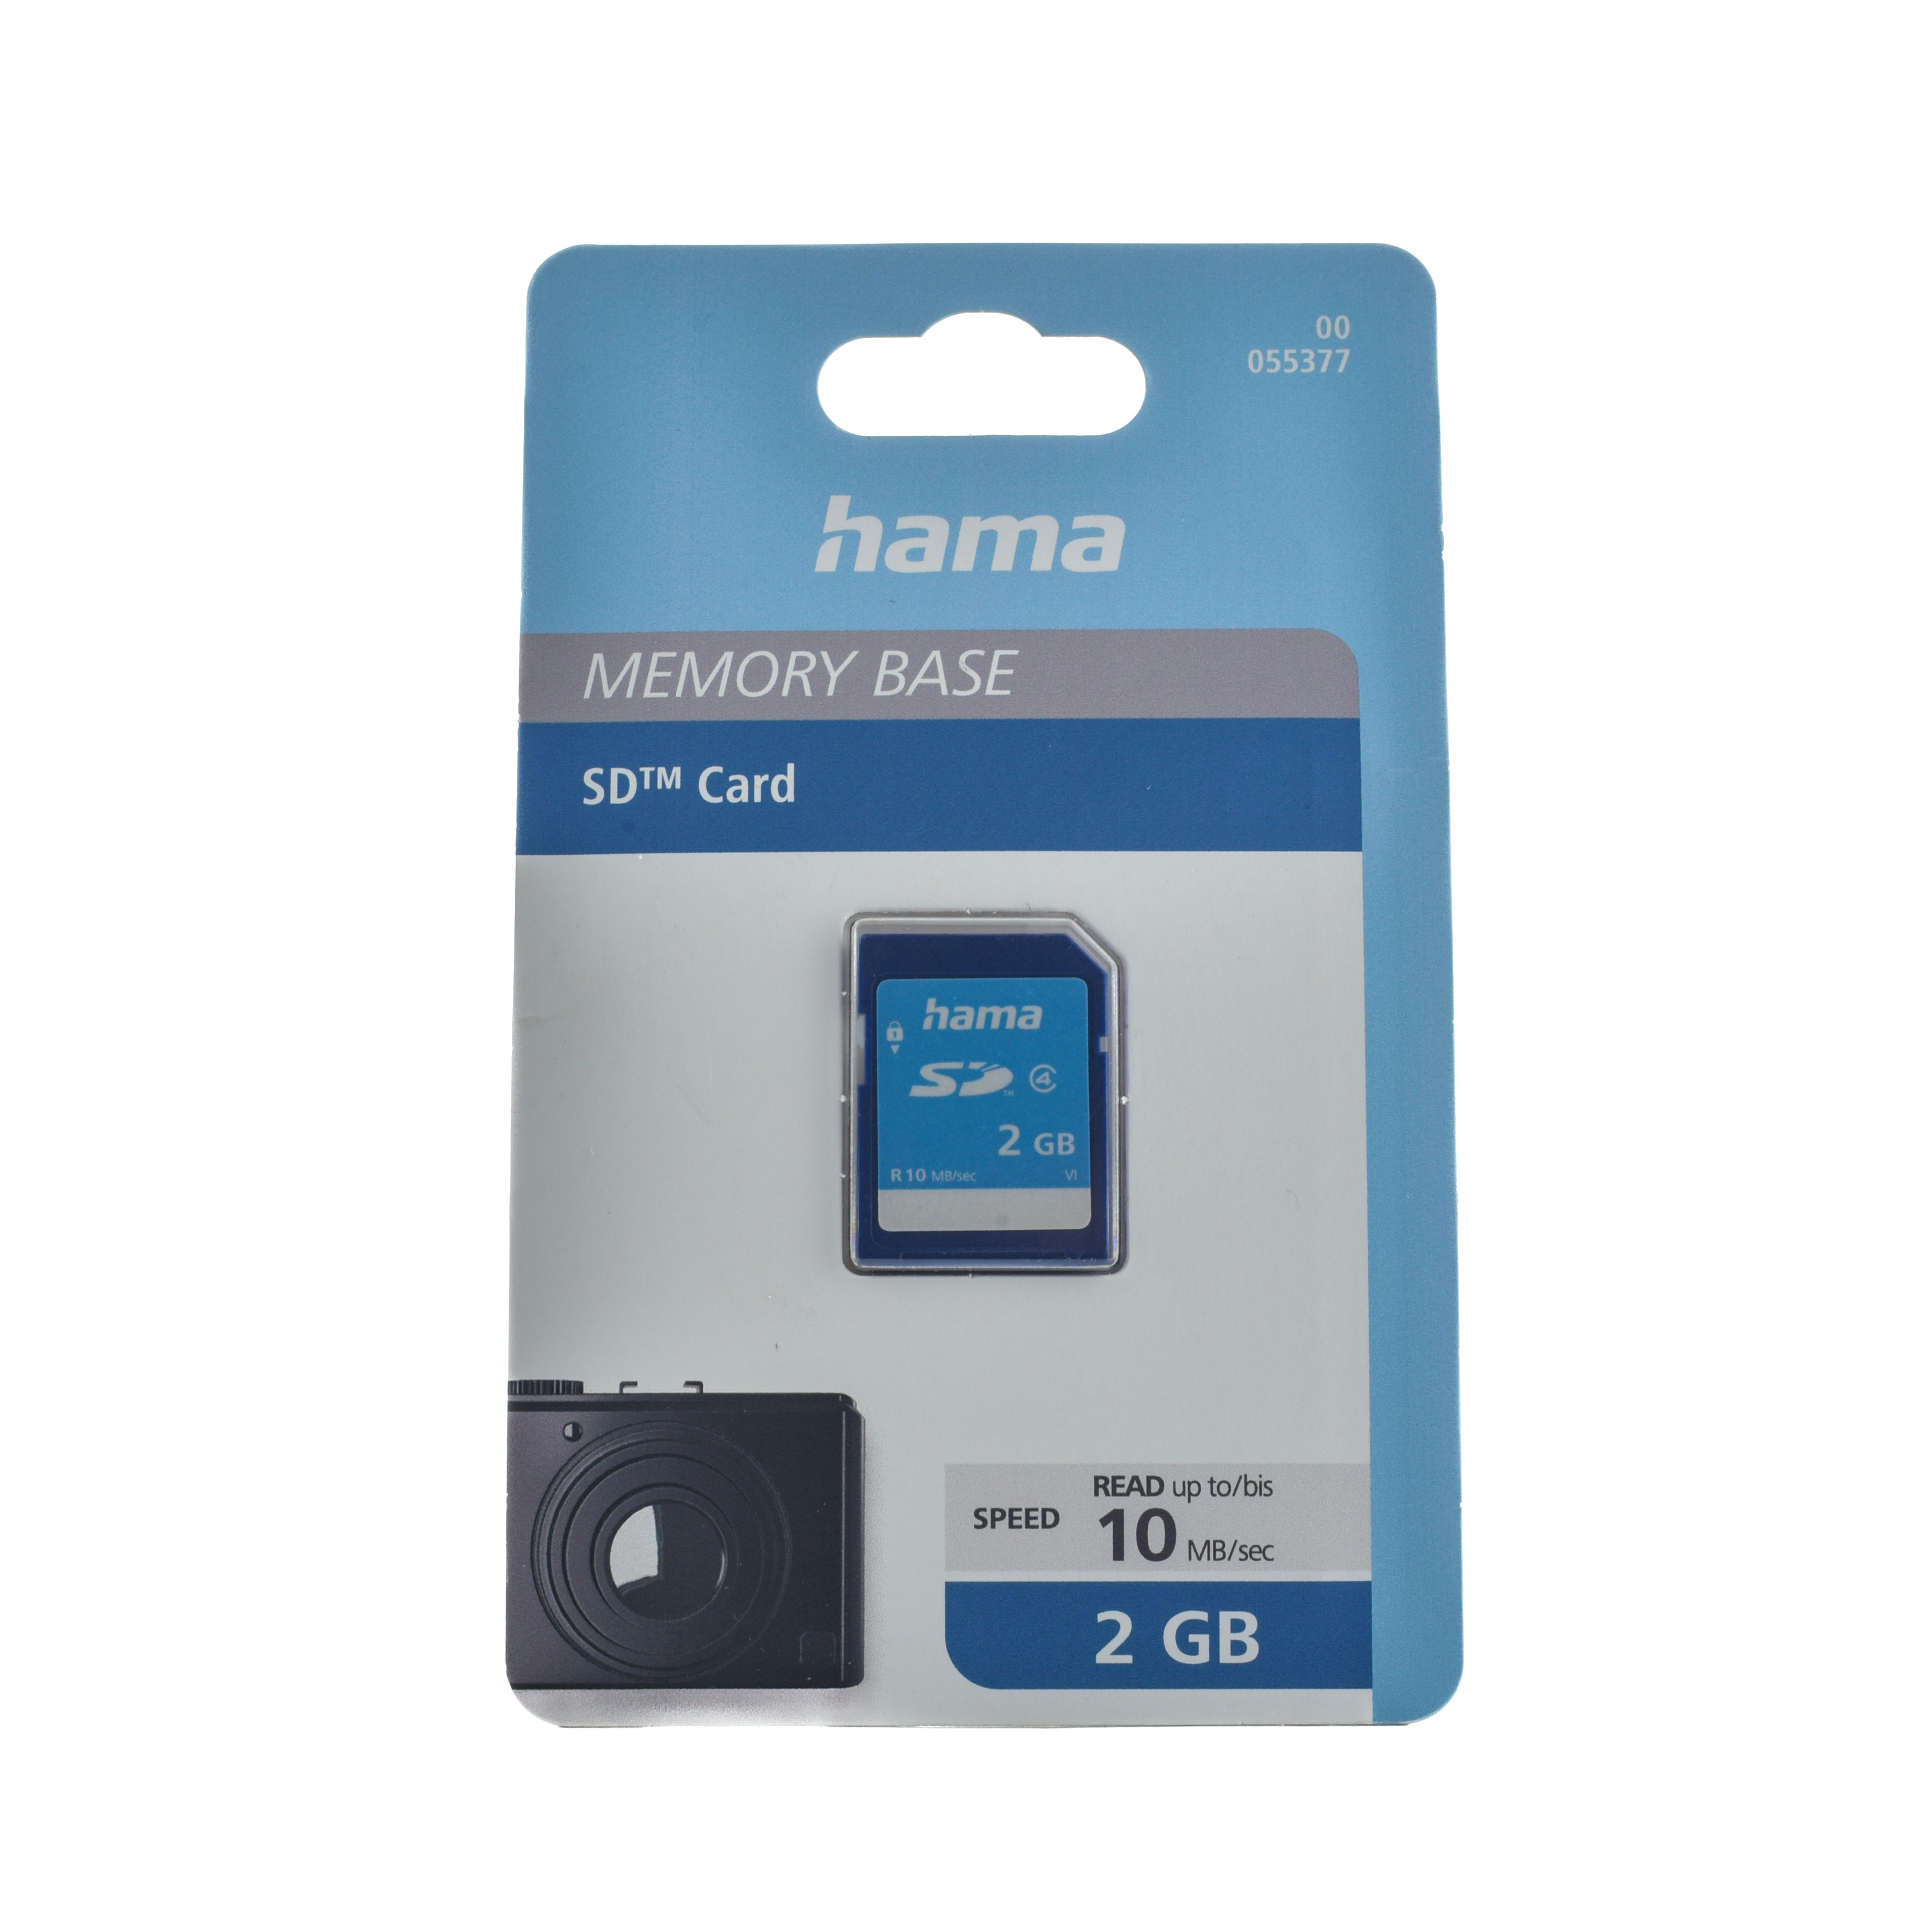 Hama 2 GB SDHC Card Memory Base